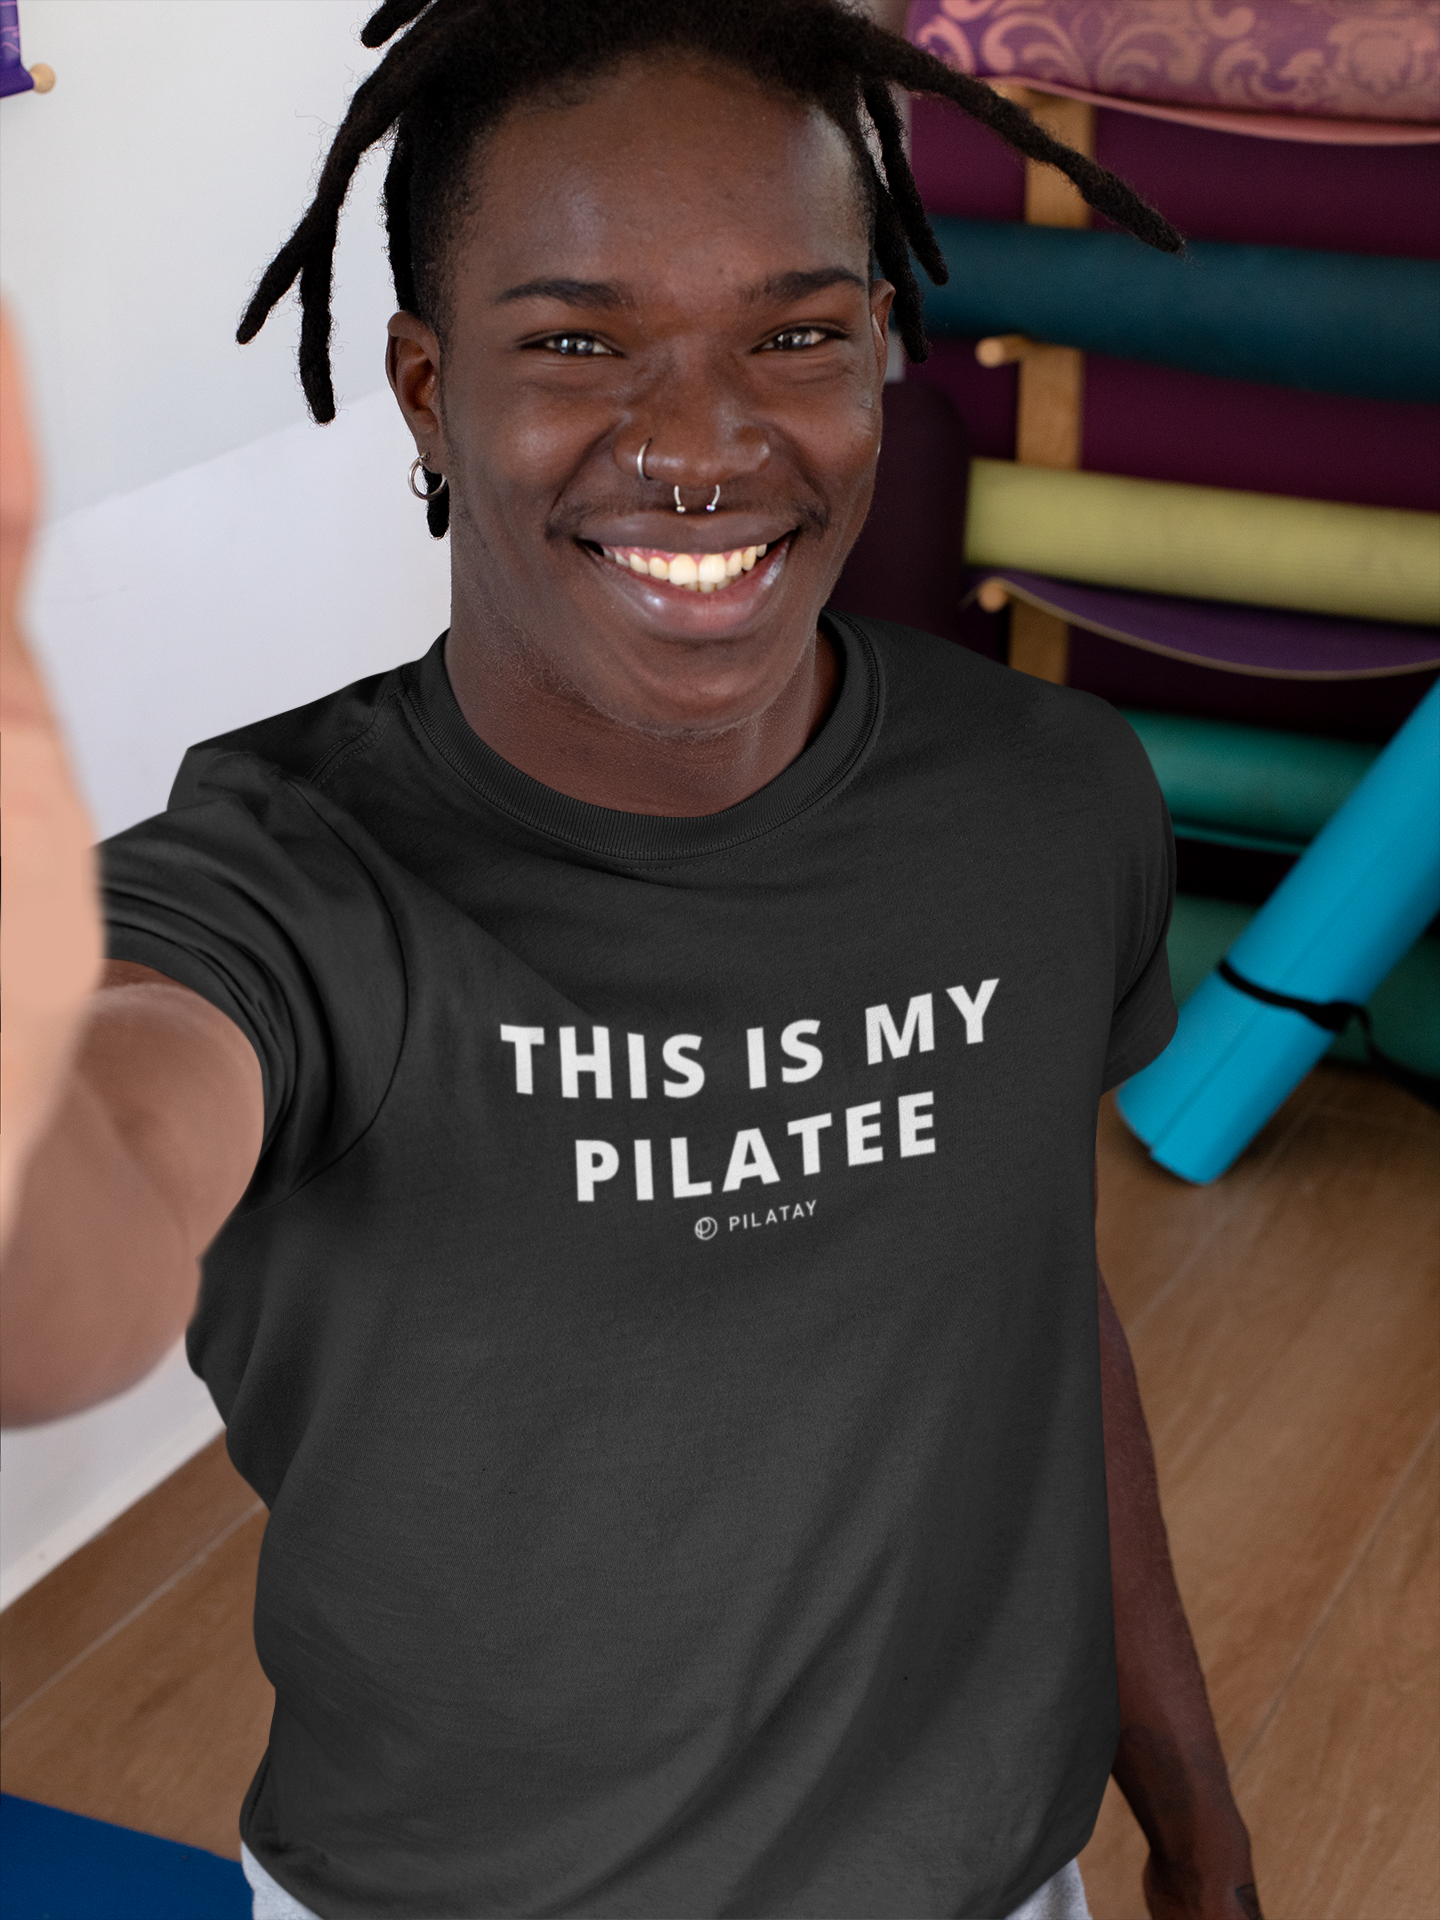 This is my pilatee - pilates t-shirt - pilates tank - pilates tank for men - pilates shirts for men - funny pilates shirts - pilates gifts 